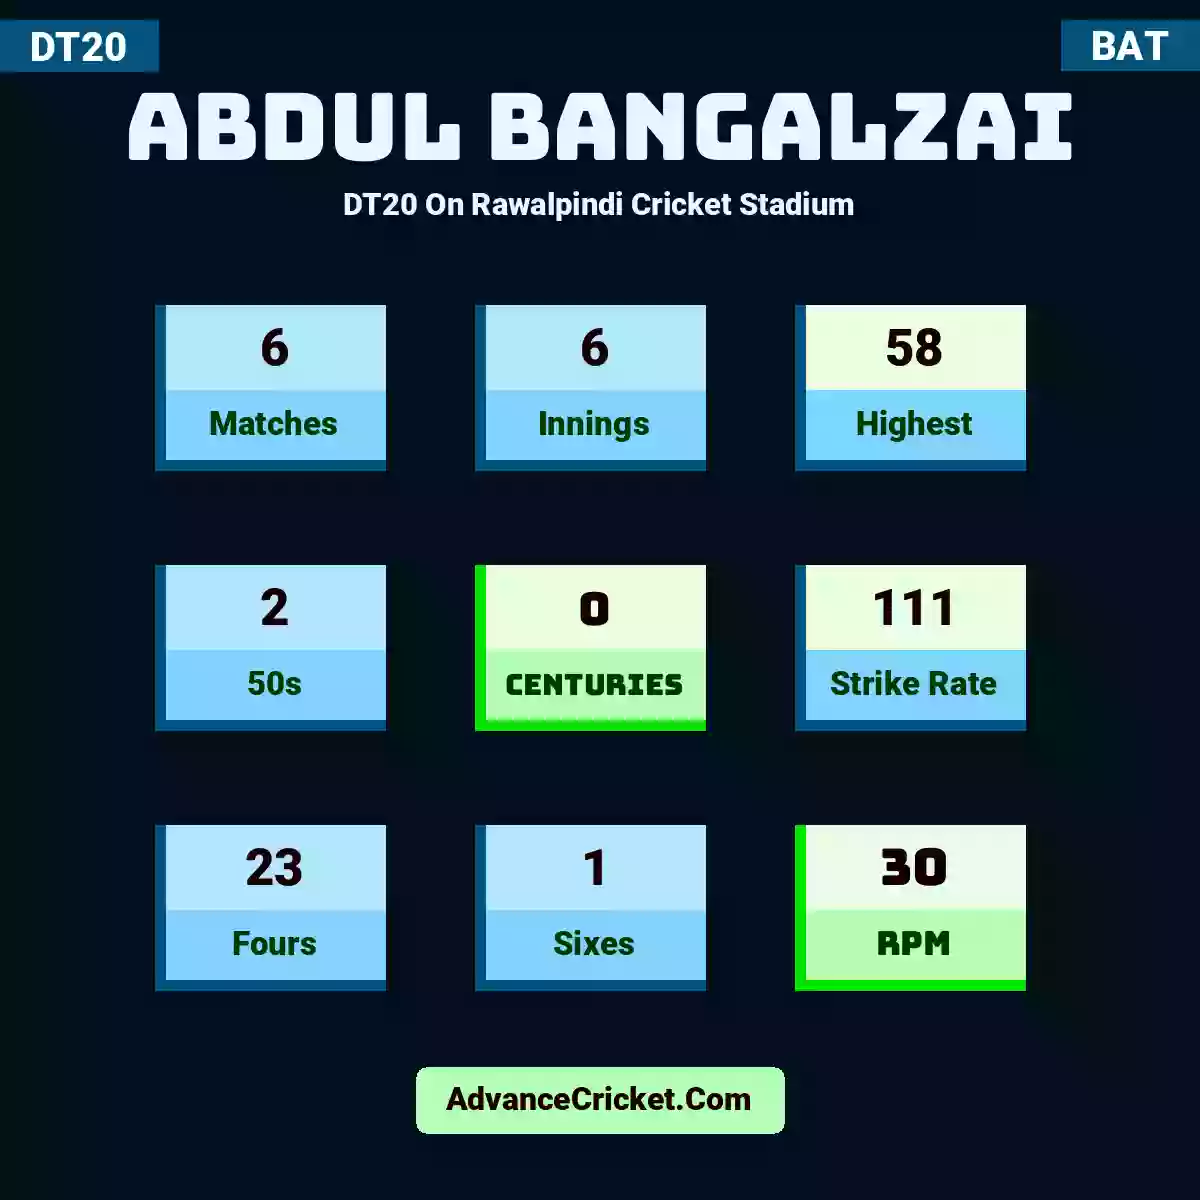 Abdul Bangalzai DT20  On Rawalpindi Cricket Stadium, Abdul Bangalzai played 6 matches, scored 58 runs as highest, 2 half-centuries, and 0 centuries, with a strike rate of 111. A.Bangalzai hit 23 fours and 1 sixes, with an RPM of 30.